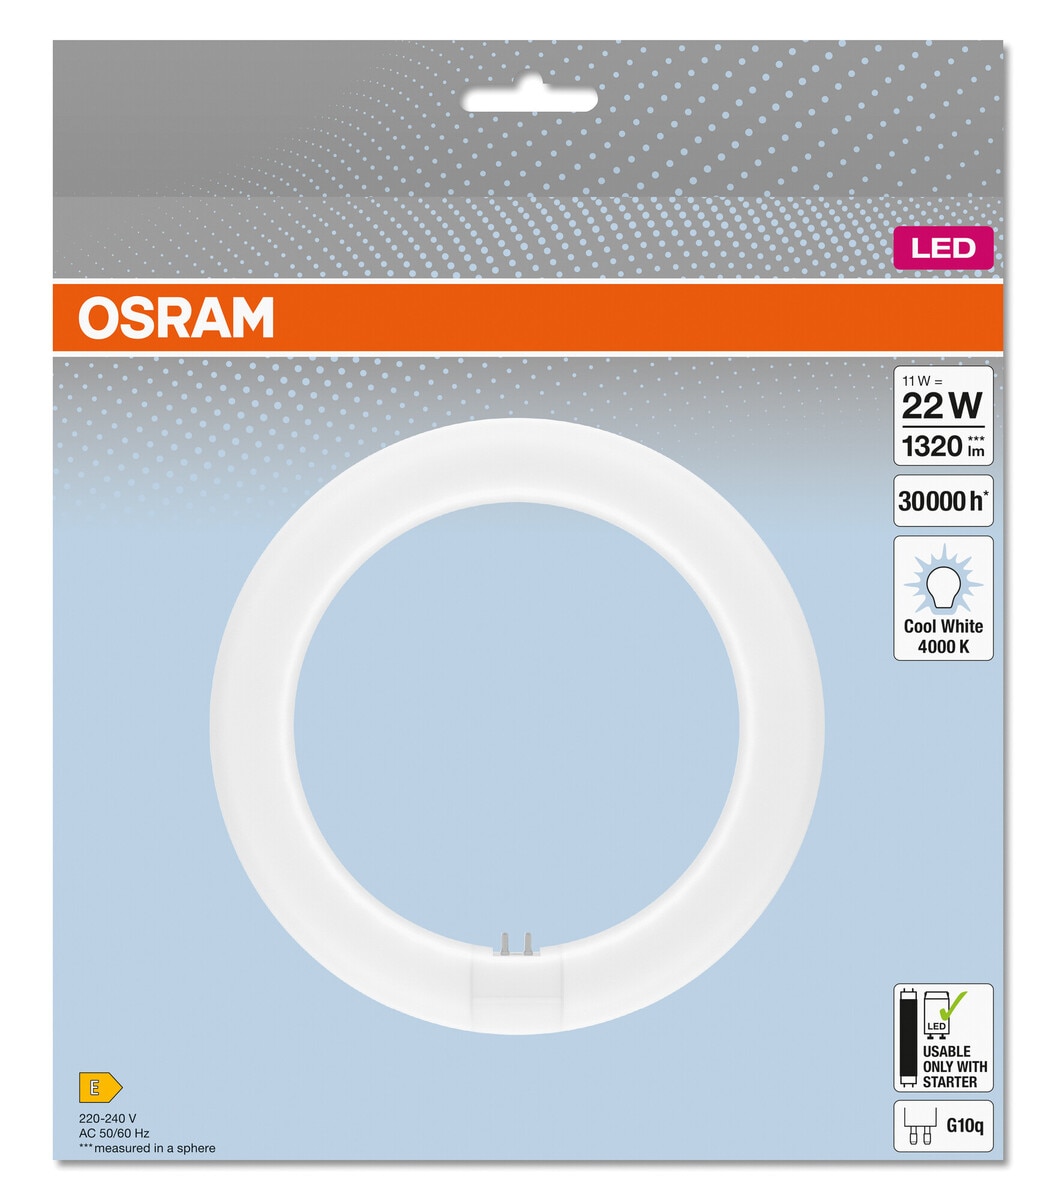 LED cirkellysrör T9 G10Q 11 W Osram SubstiTUBE 312 mm